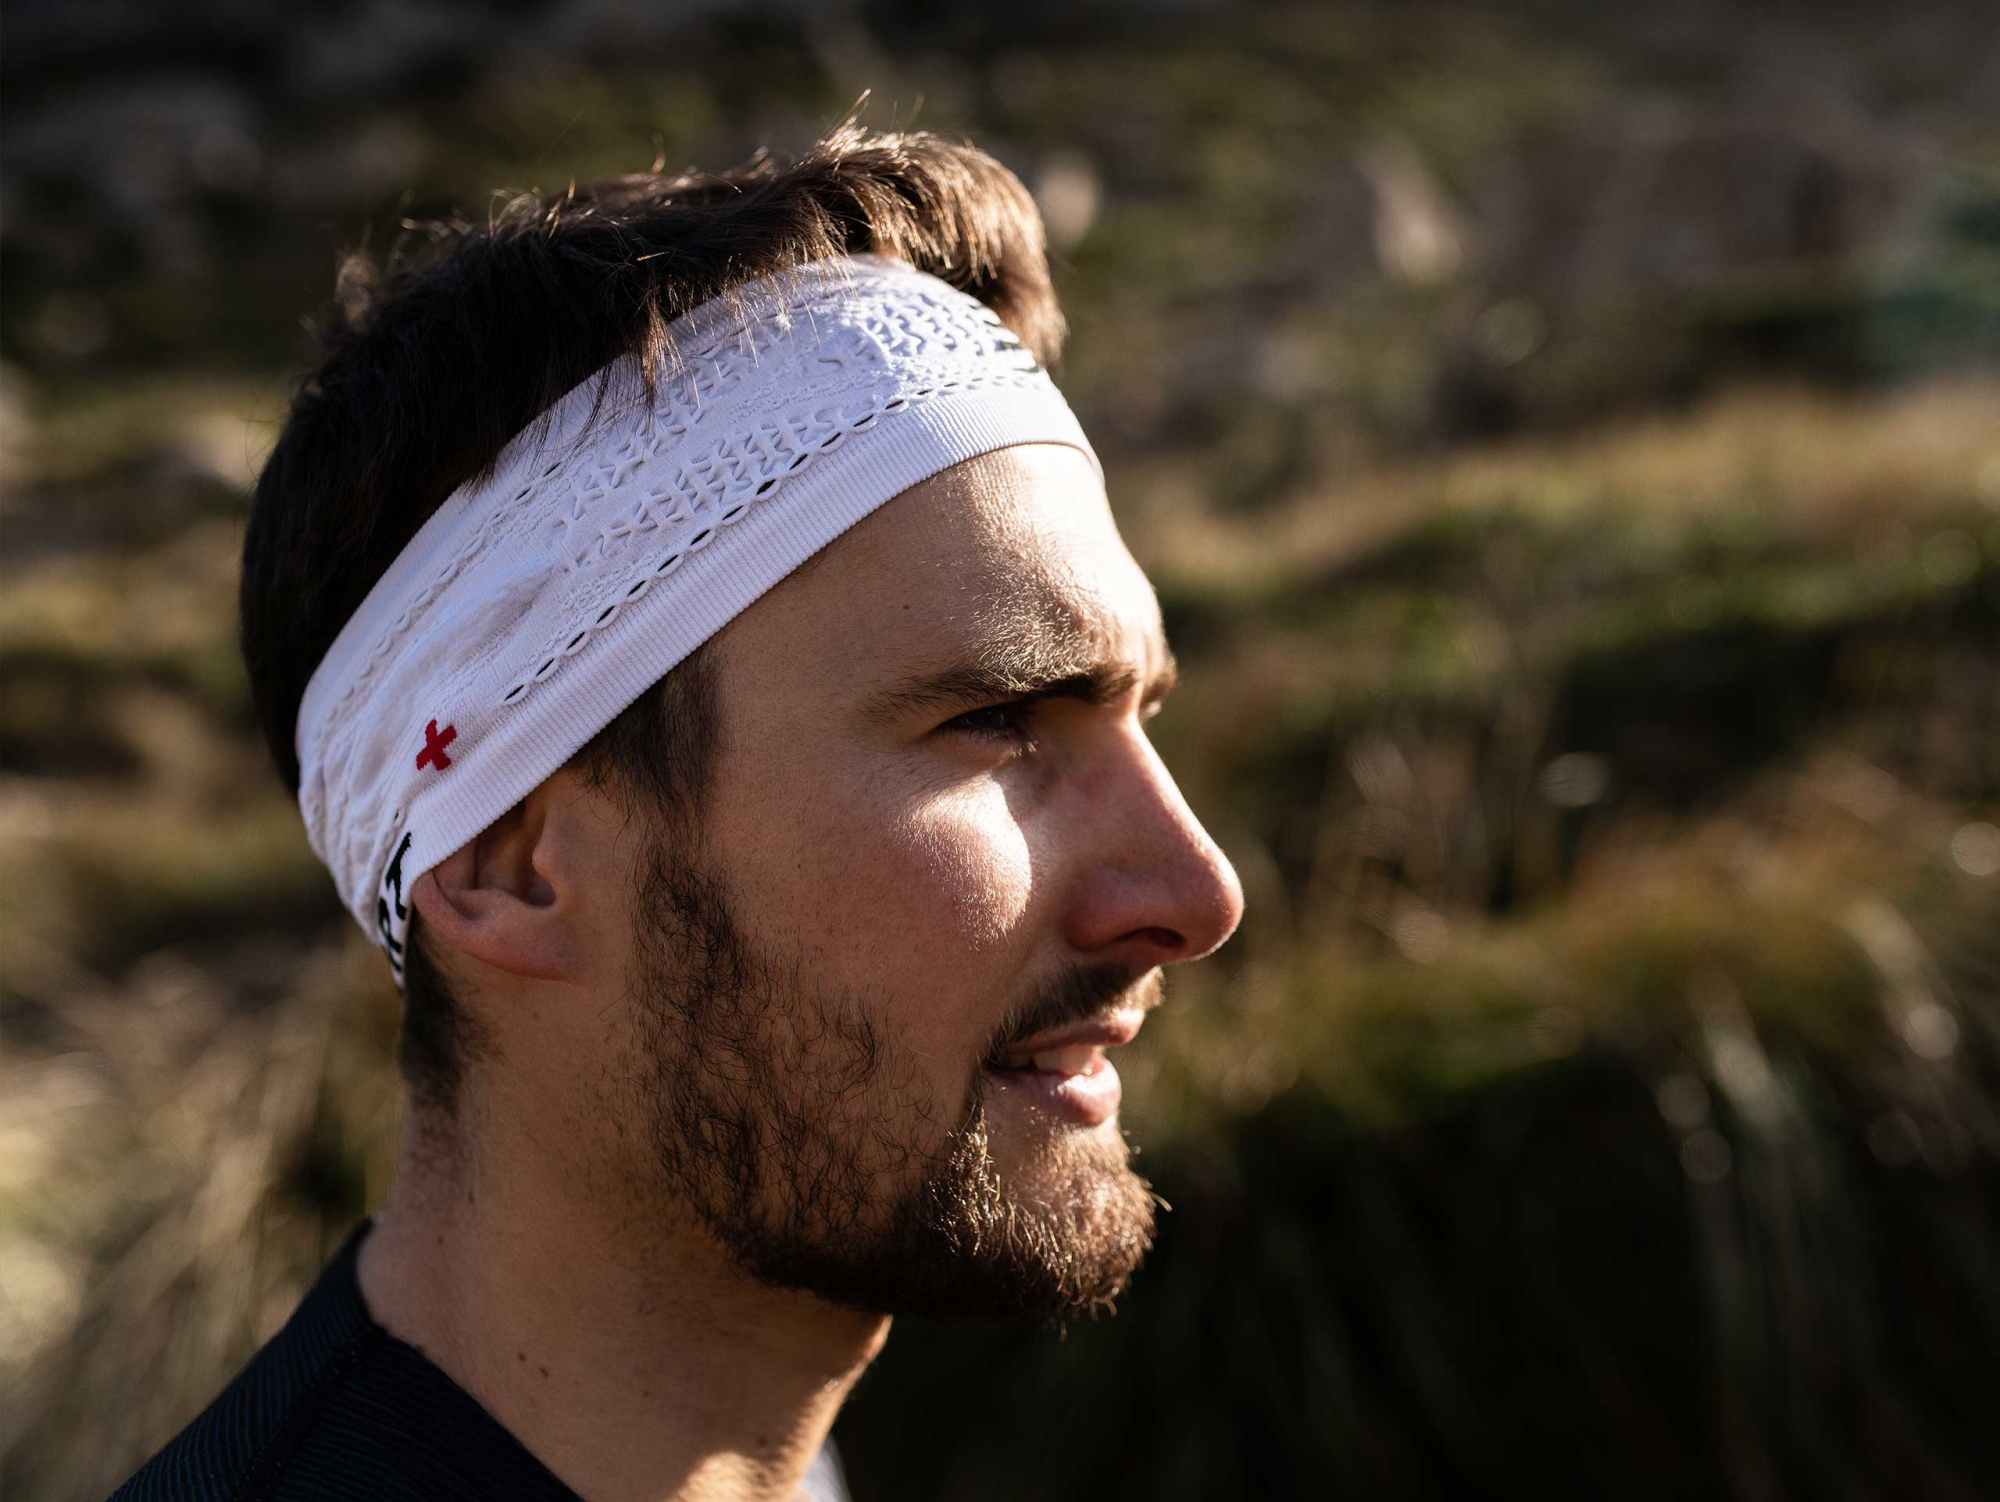 Functional sports headband